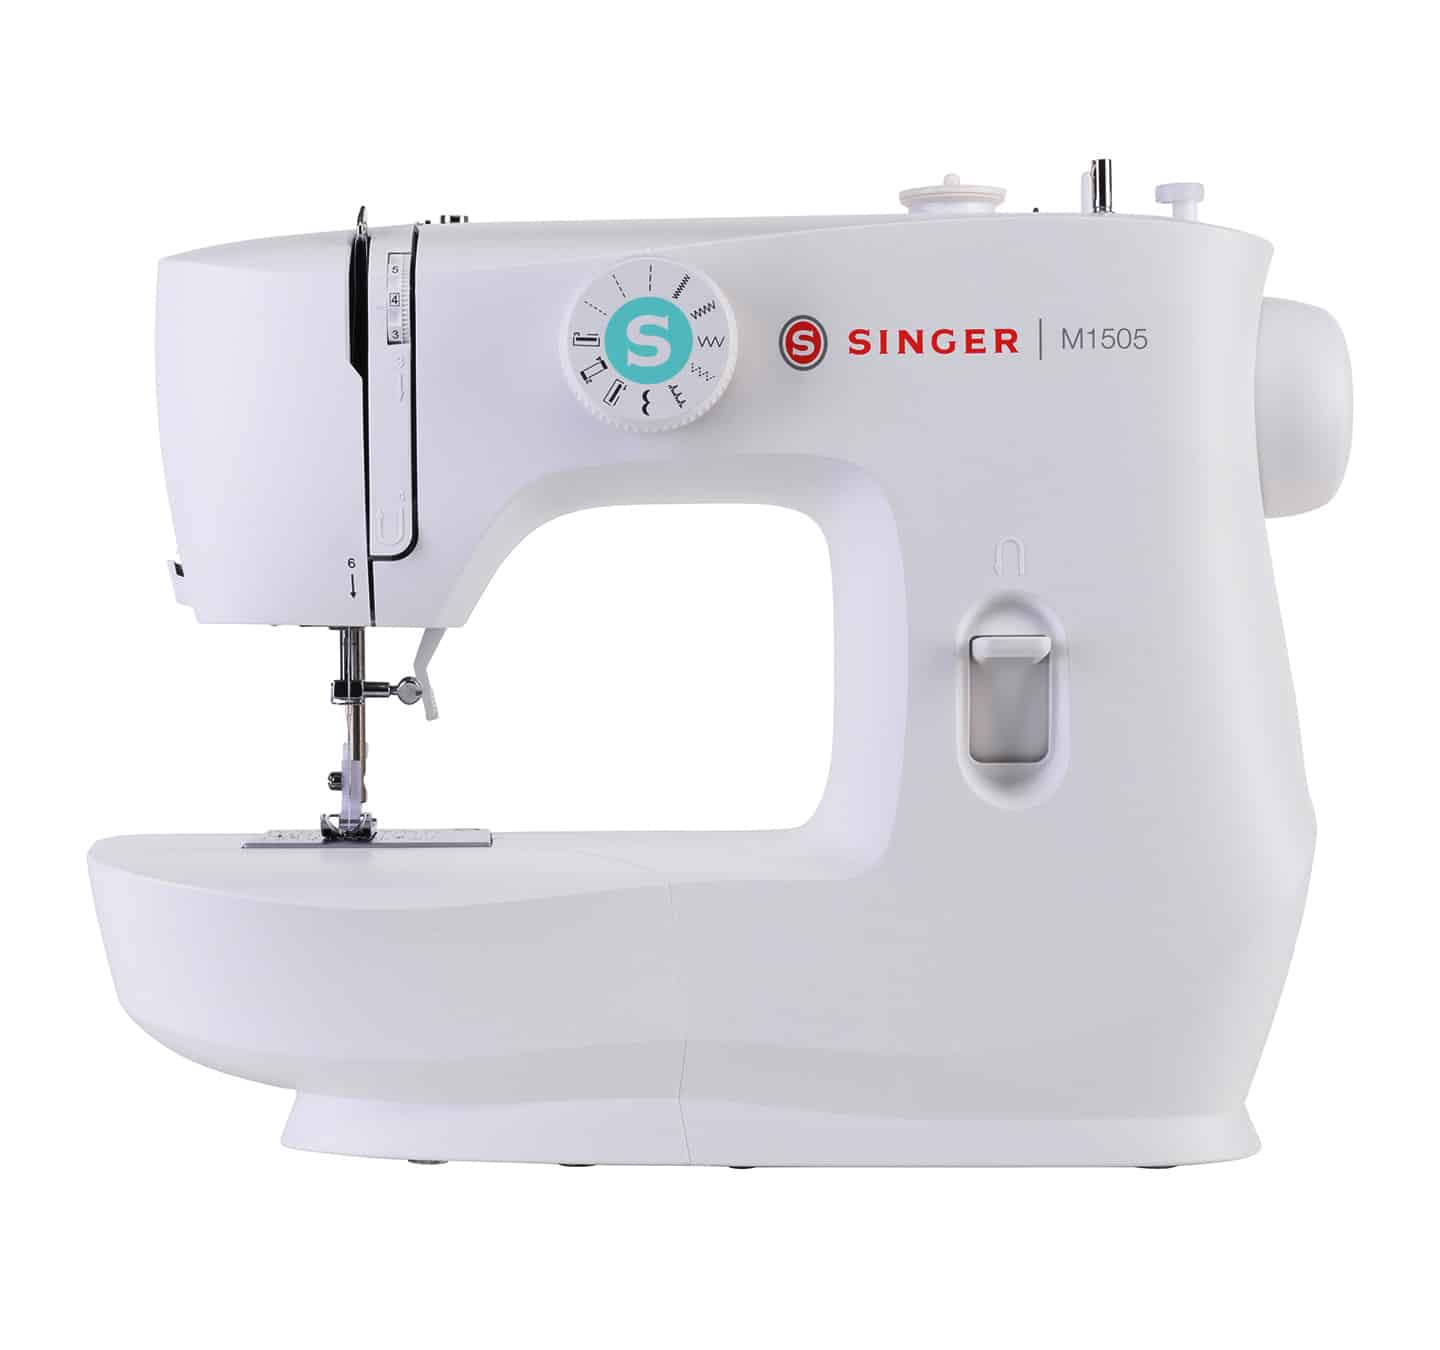 Singer_cheap_Beginner sewing machine